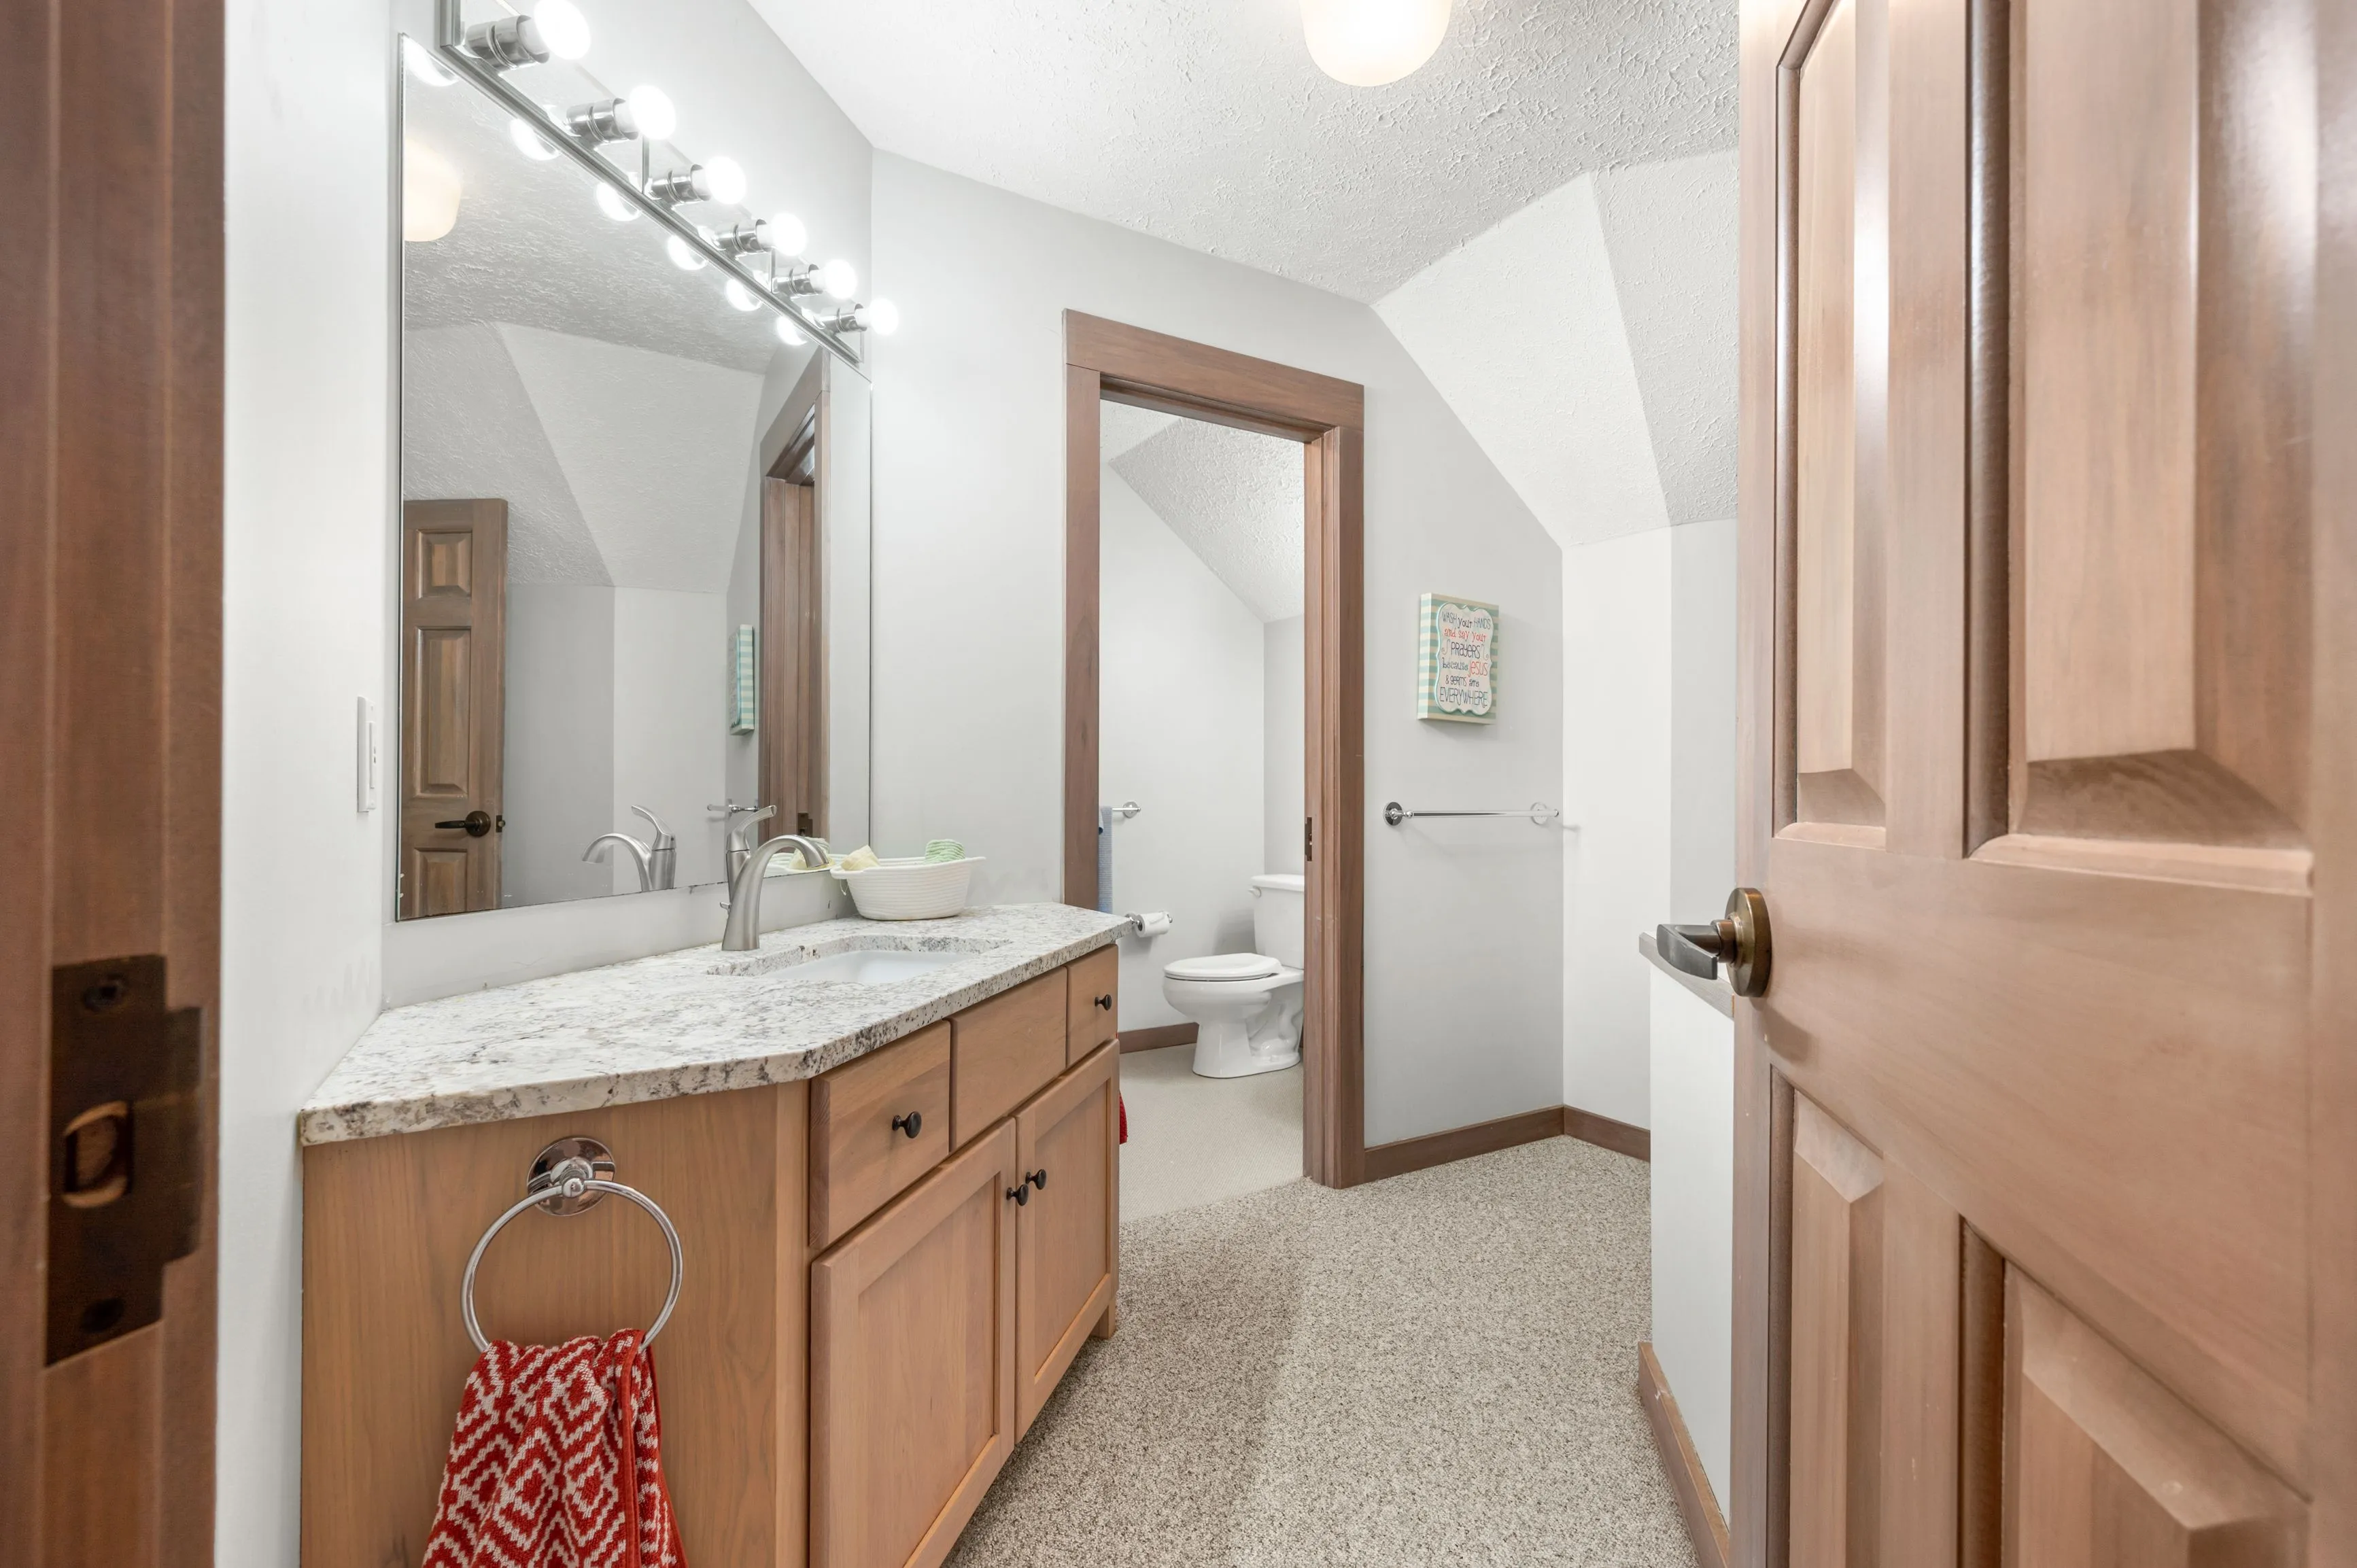 Modern bathroom interior with dual sinks, large mirror, and terrazzo flooring.